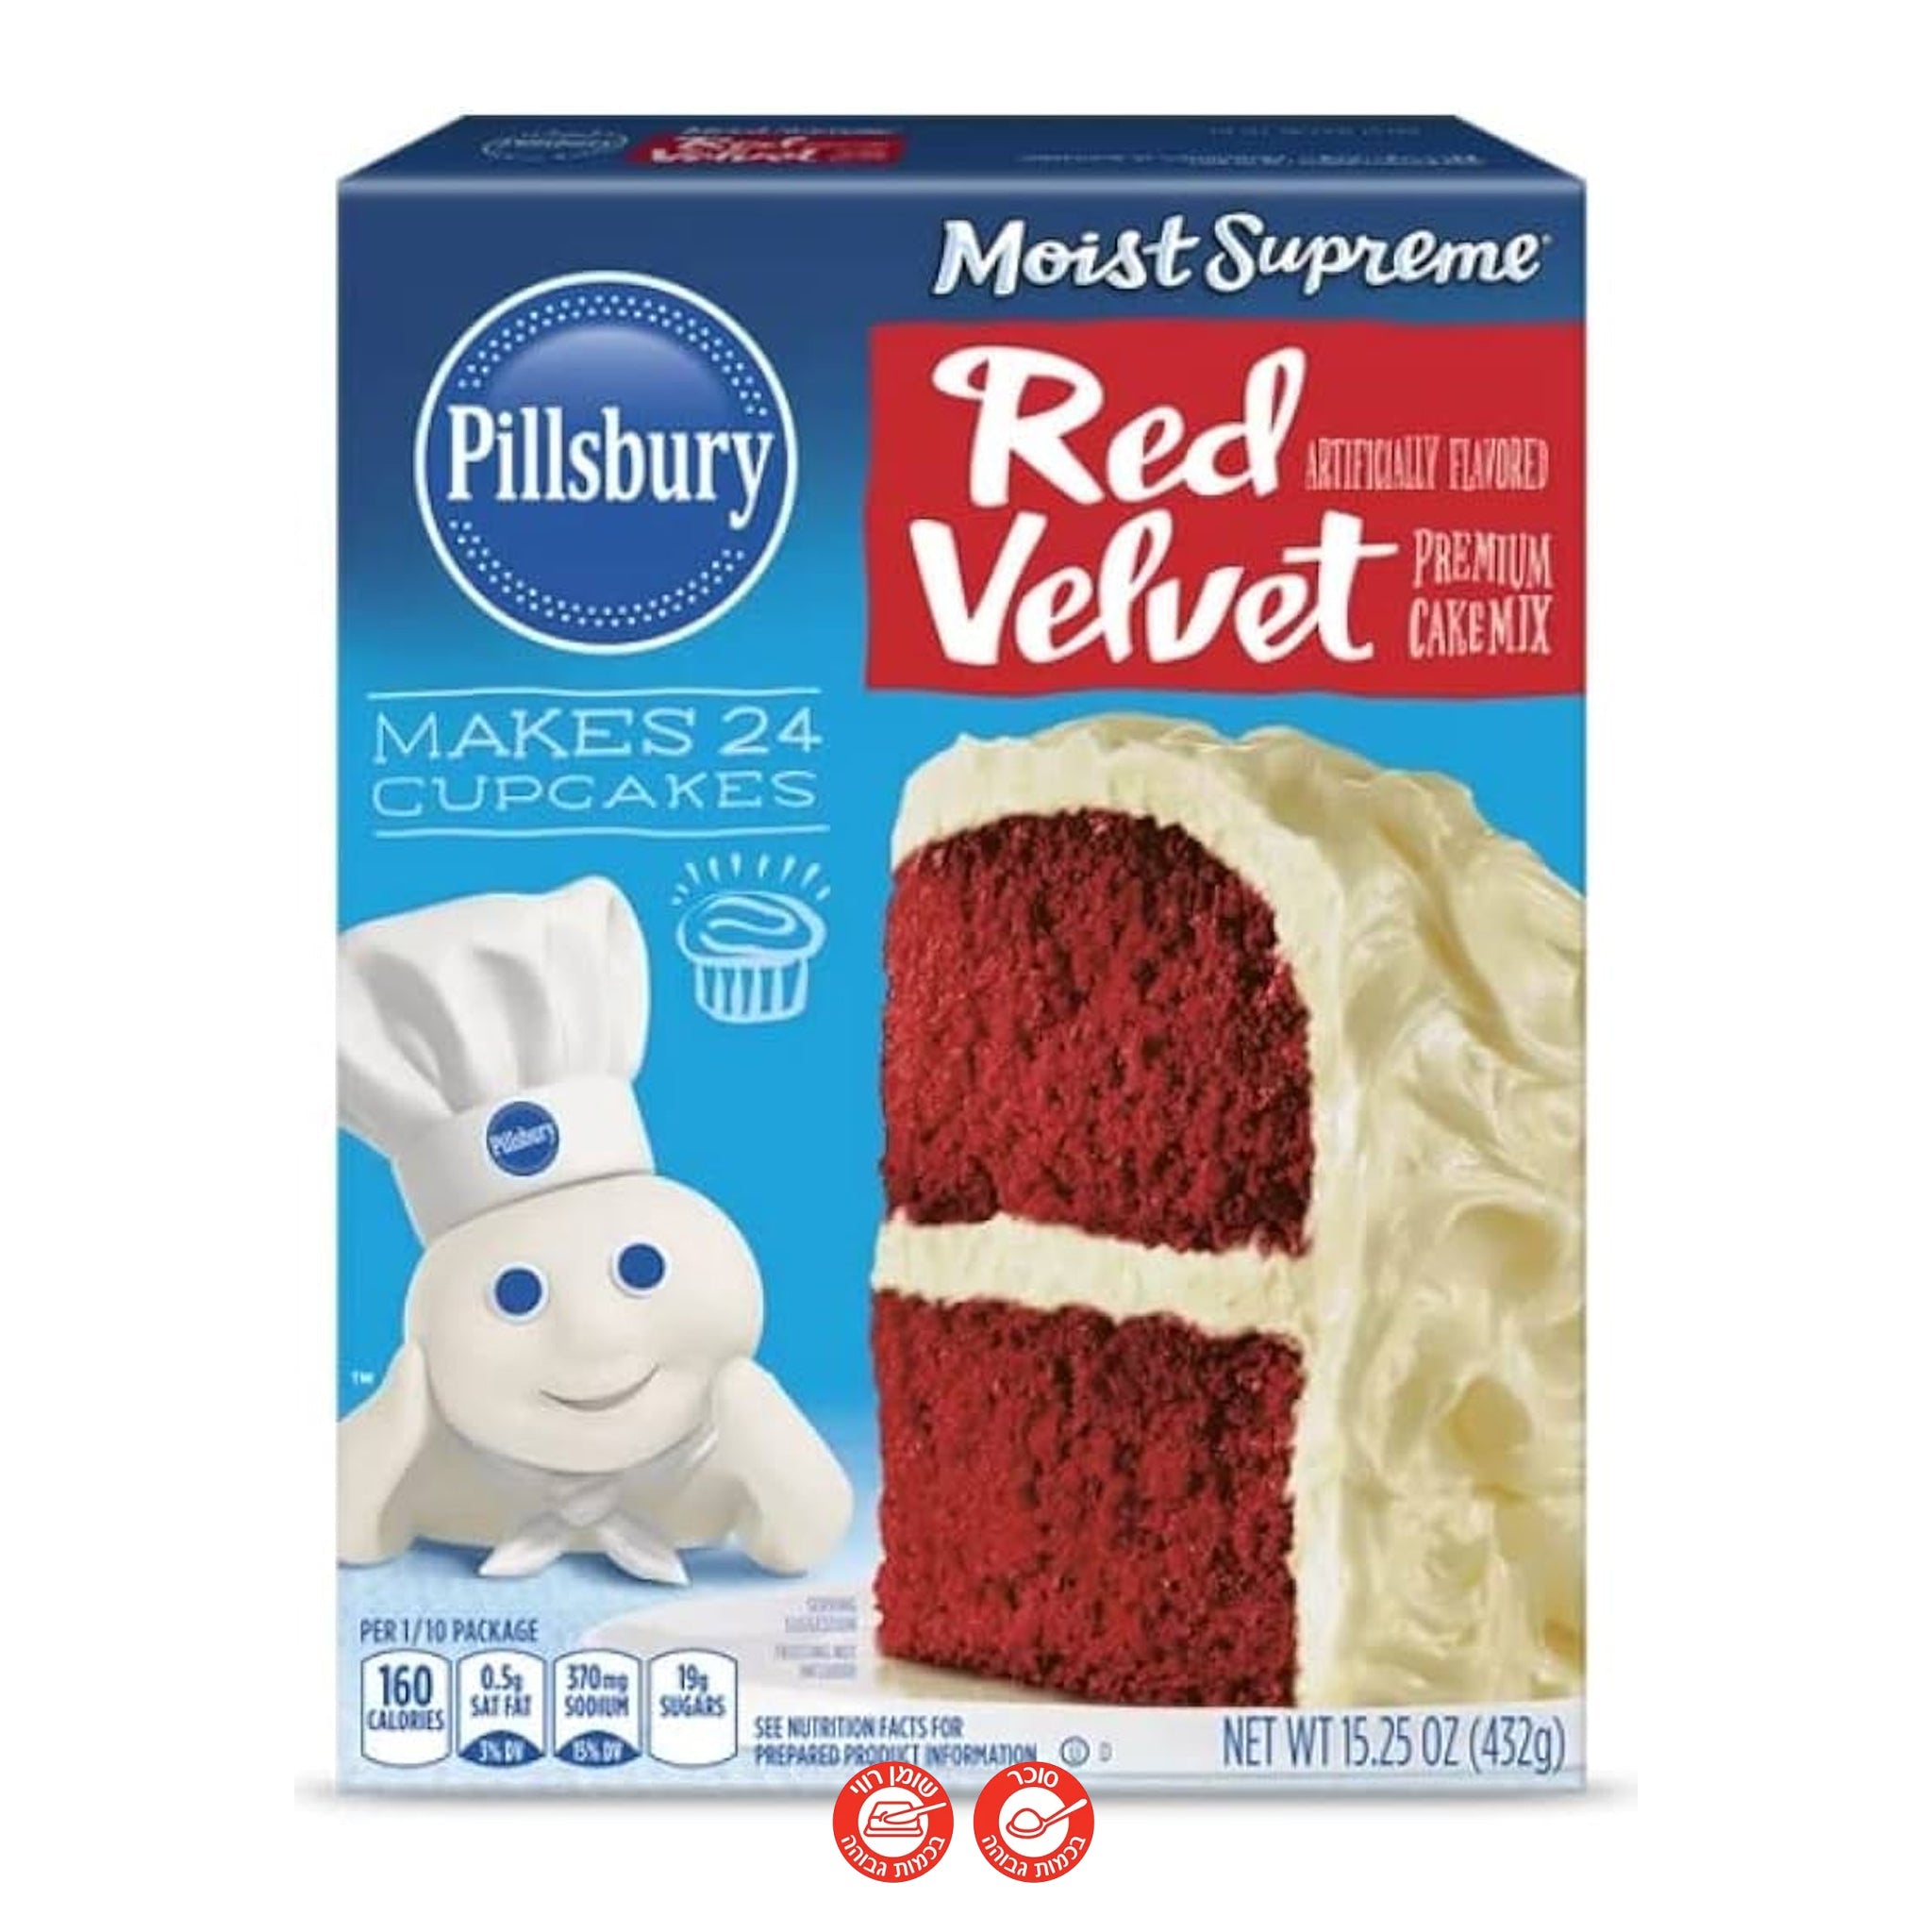 Pillsbury Red Velvet עוגת פילסברי רד וולוט להכנה מהירה